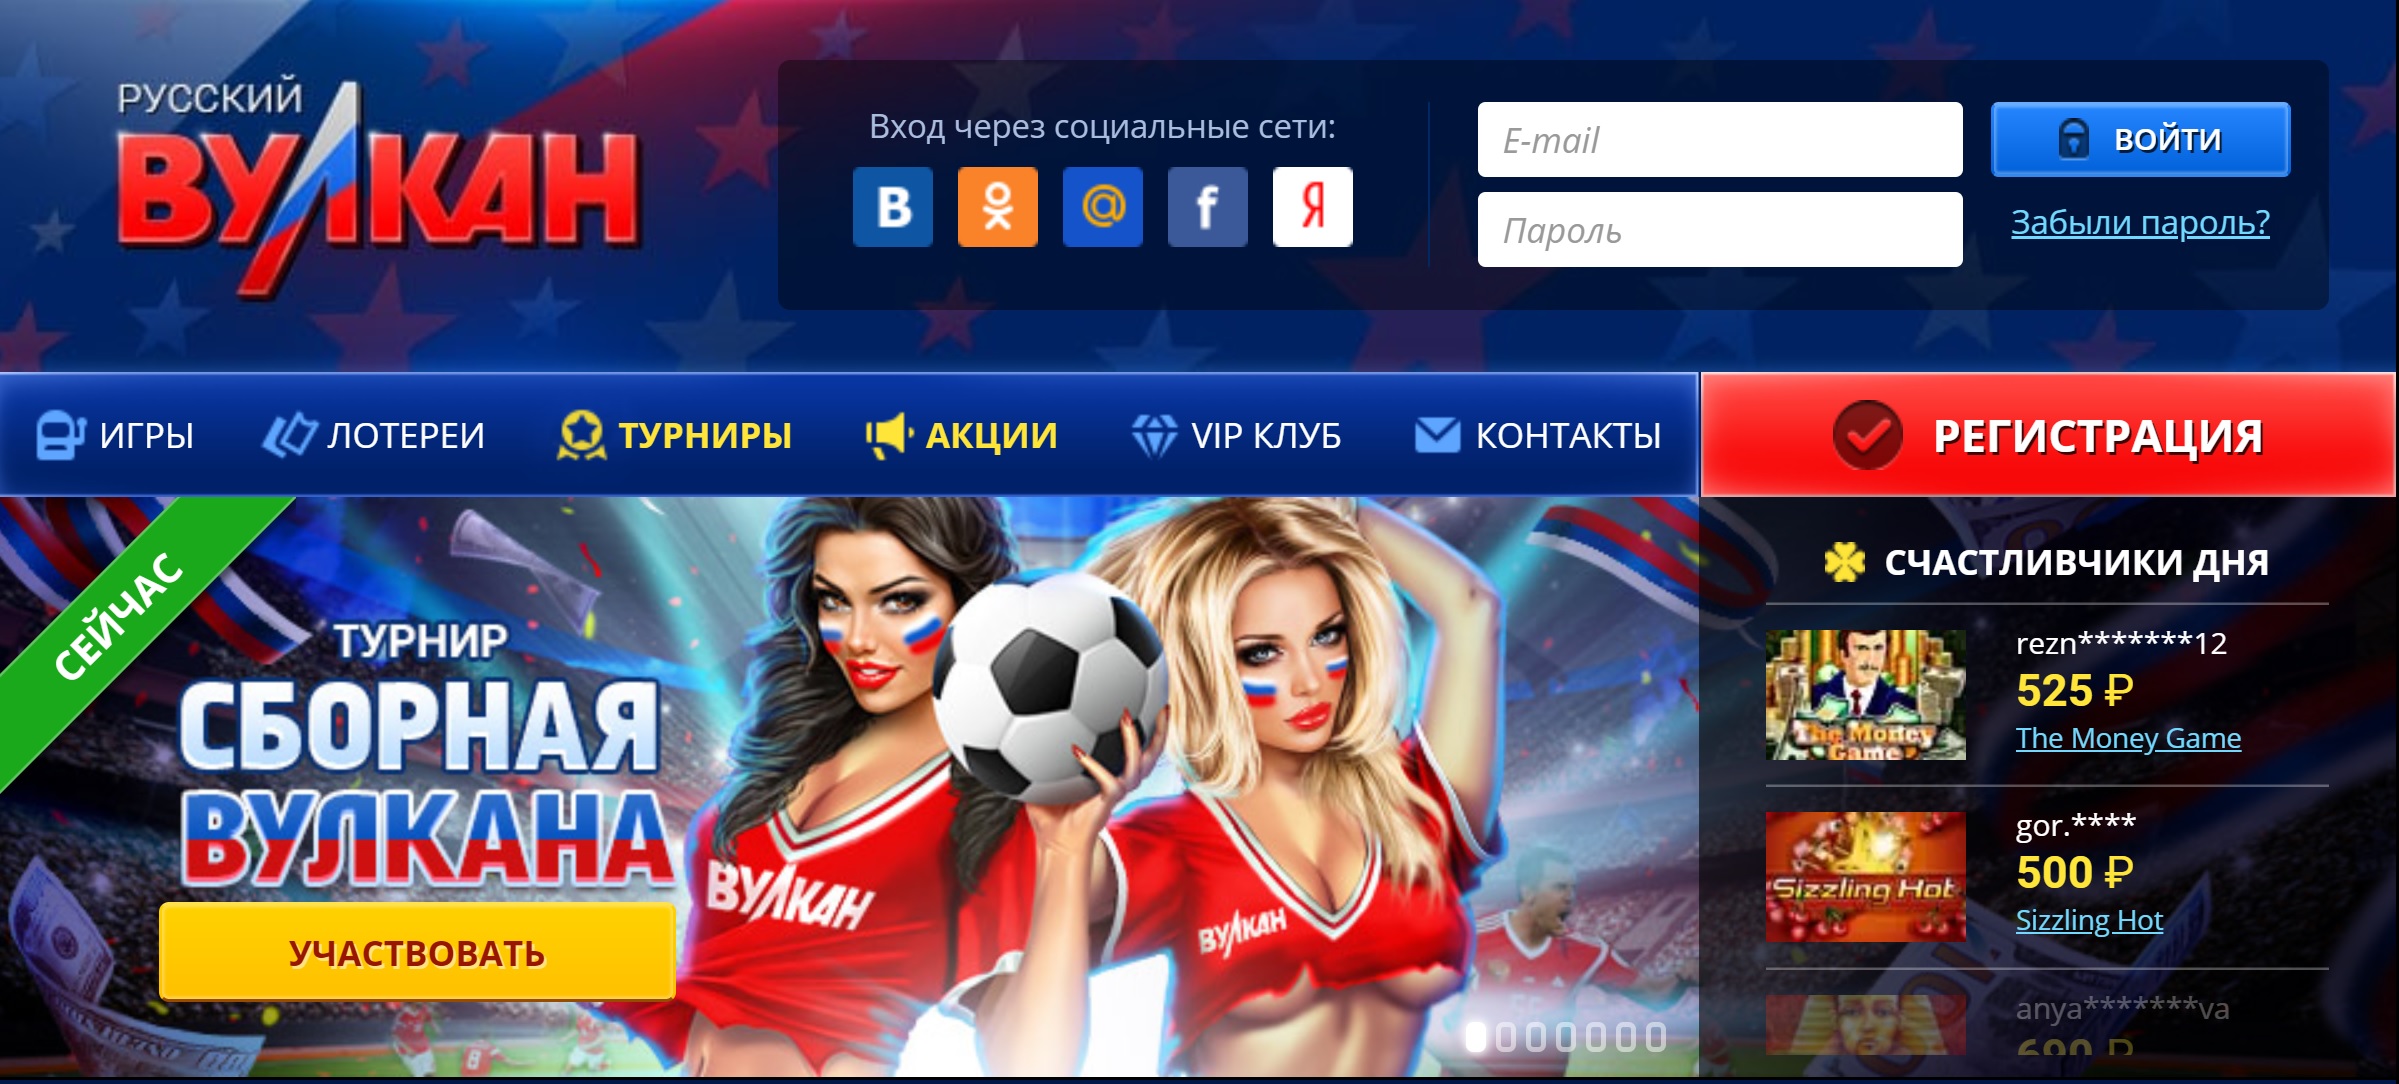 Русский вулкан казино онлайн russian vulkan club com мостбет mostbet wx3 xyz